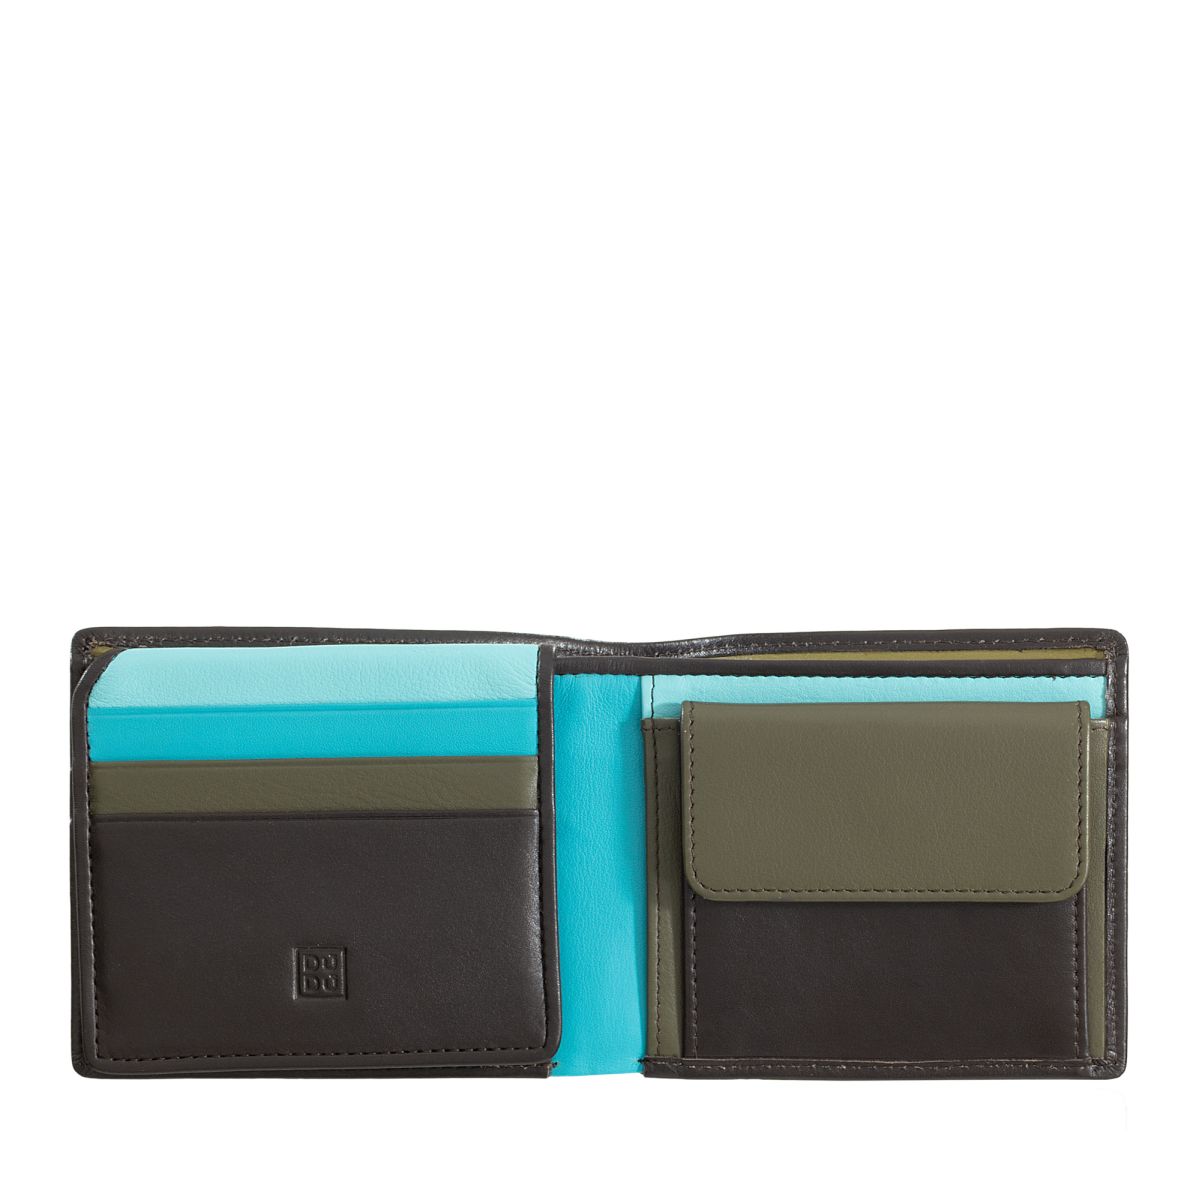 DuDu Mans genuine leather wallet - Brown